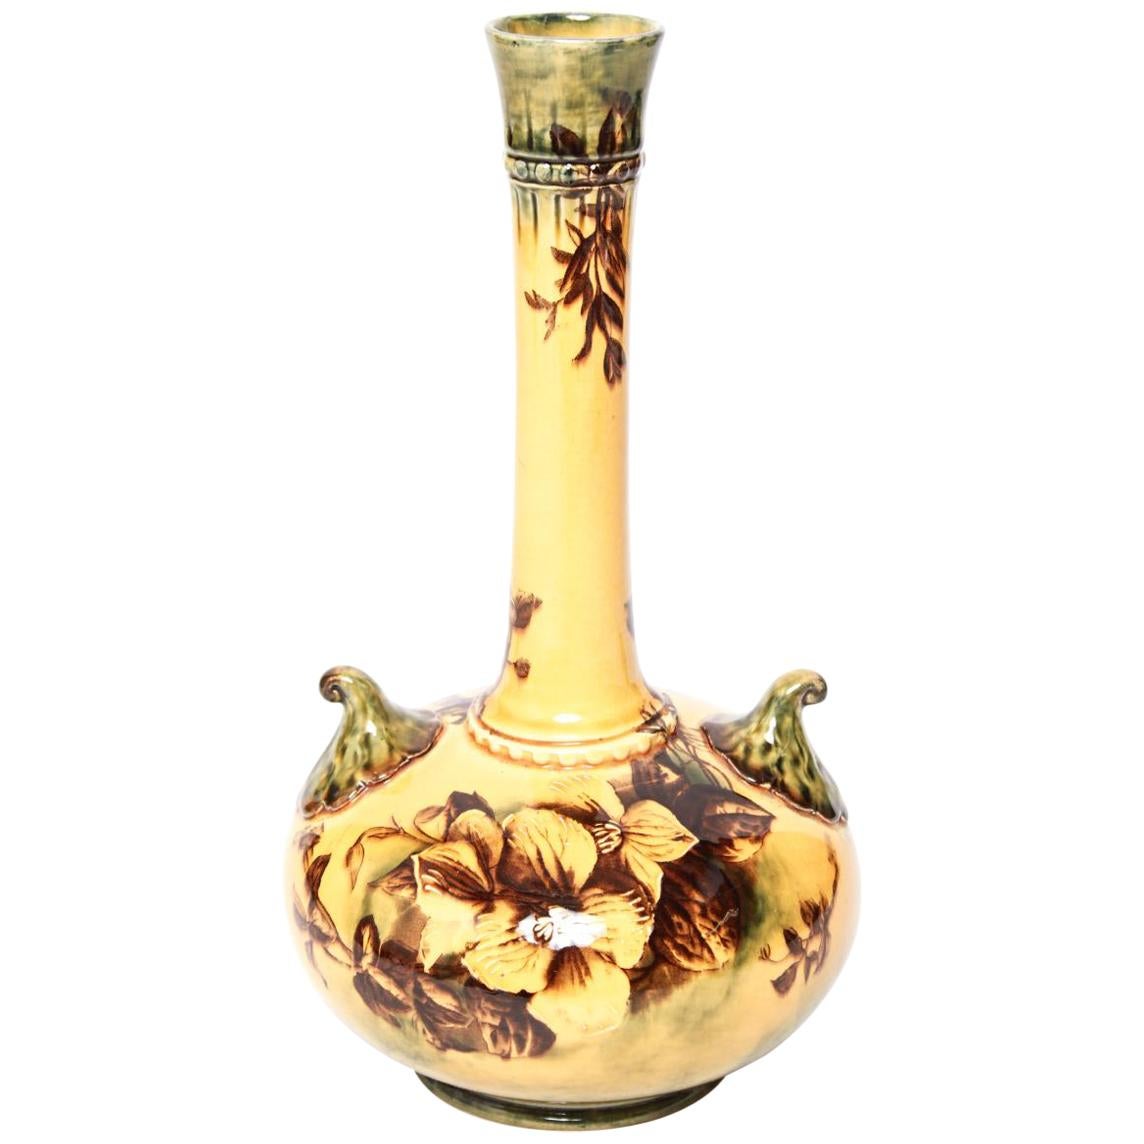 English Victorian George Jones & Sons Pottery Melrose Ware Bottle Vase